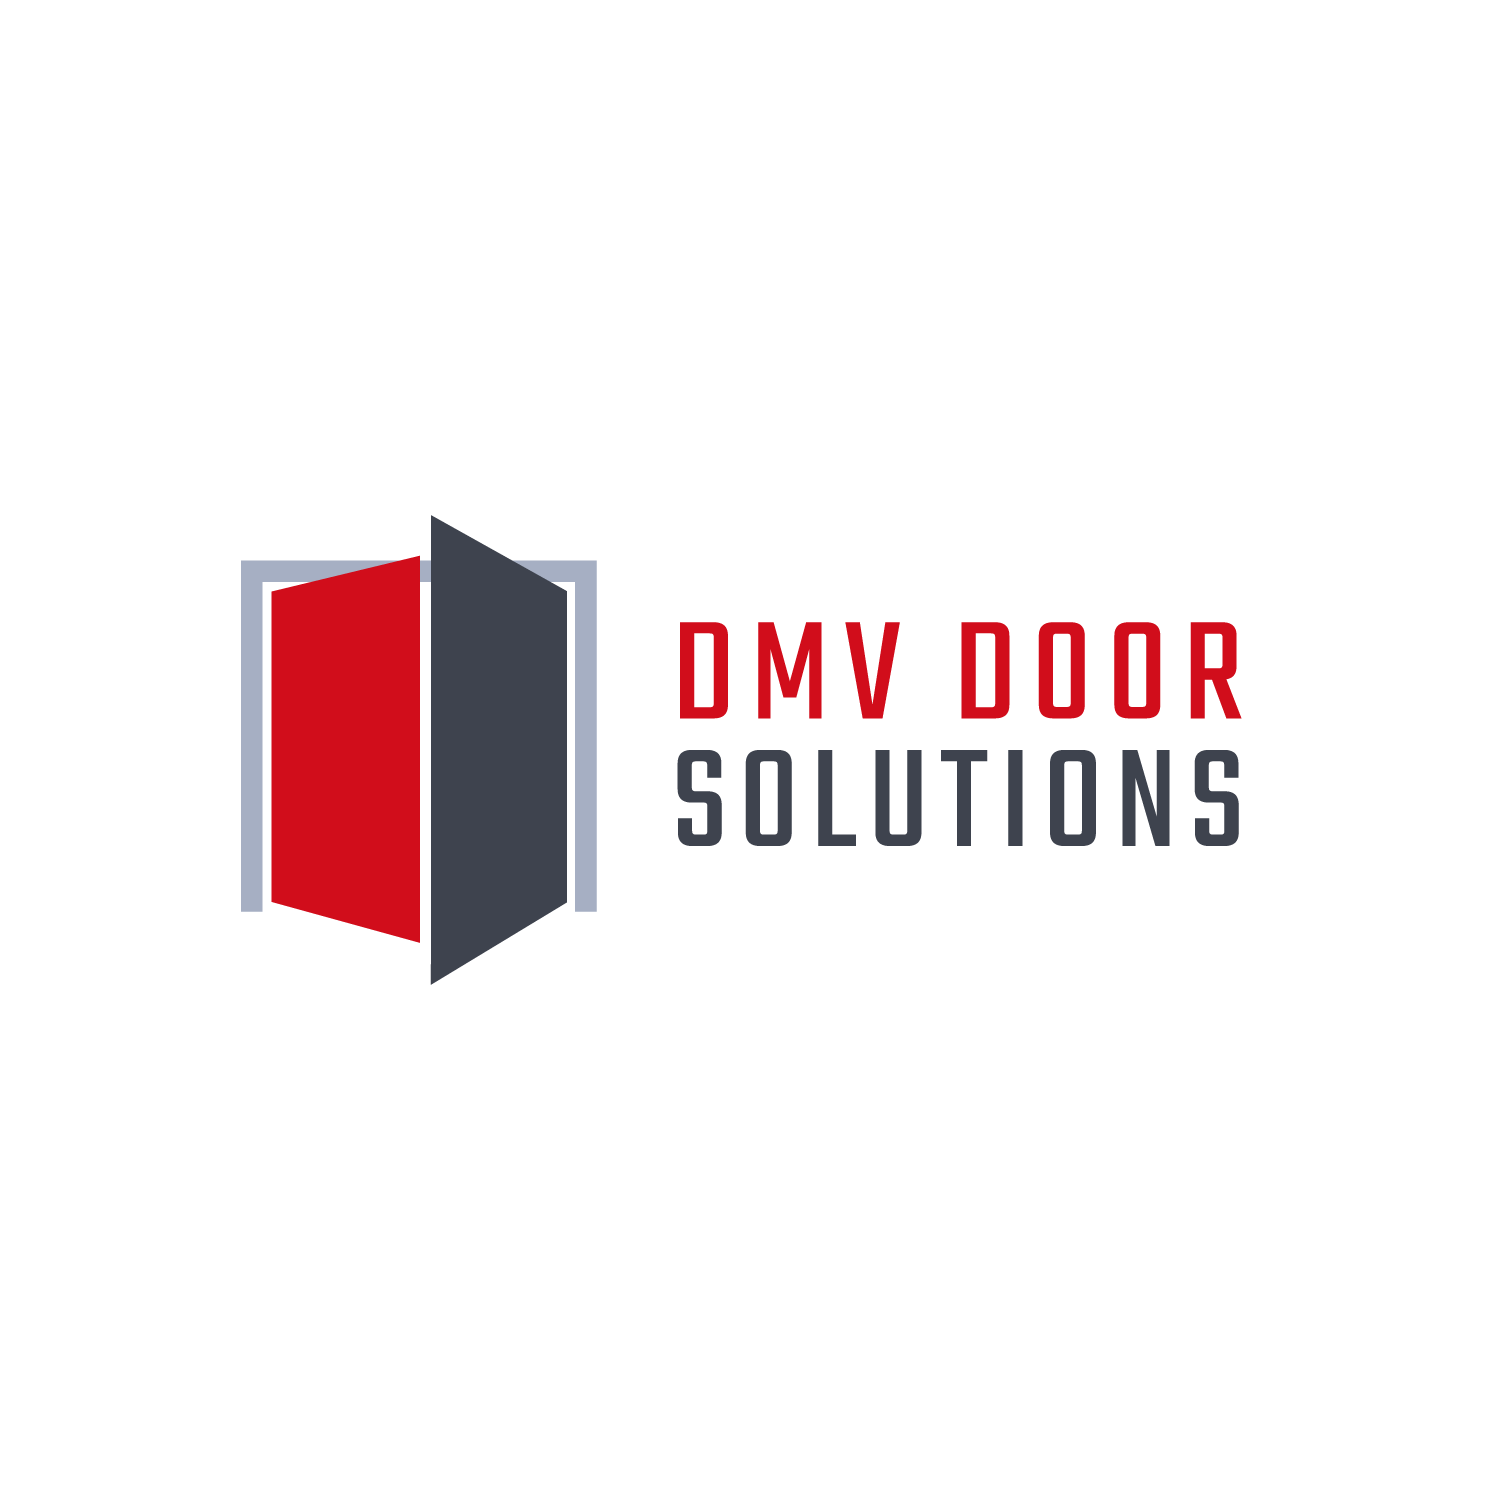 DMV Door Solutions Brand Identity